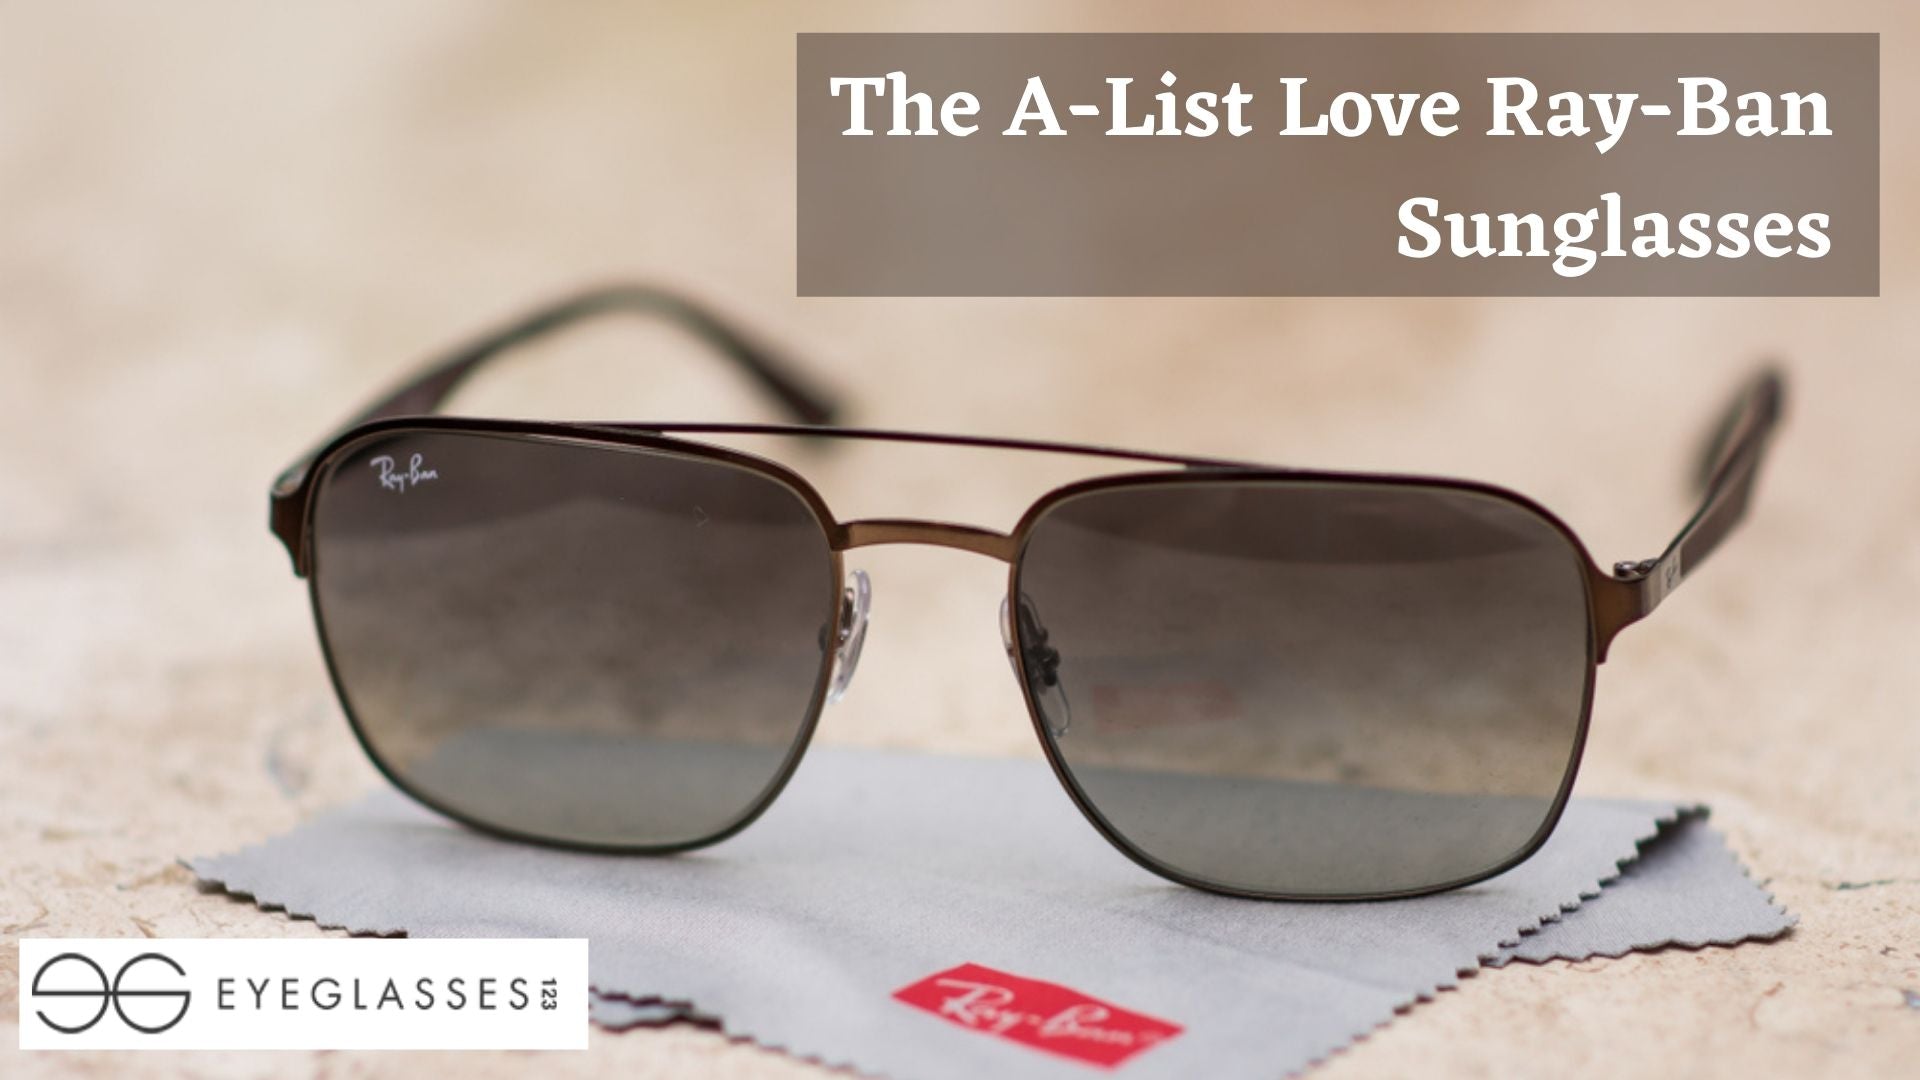 The A-List Love Ray-Ban Sunglasses